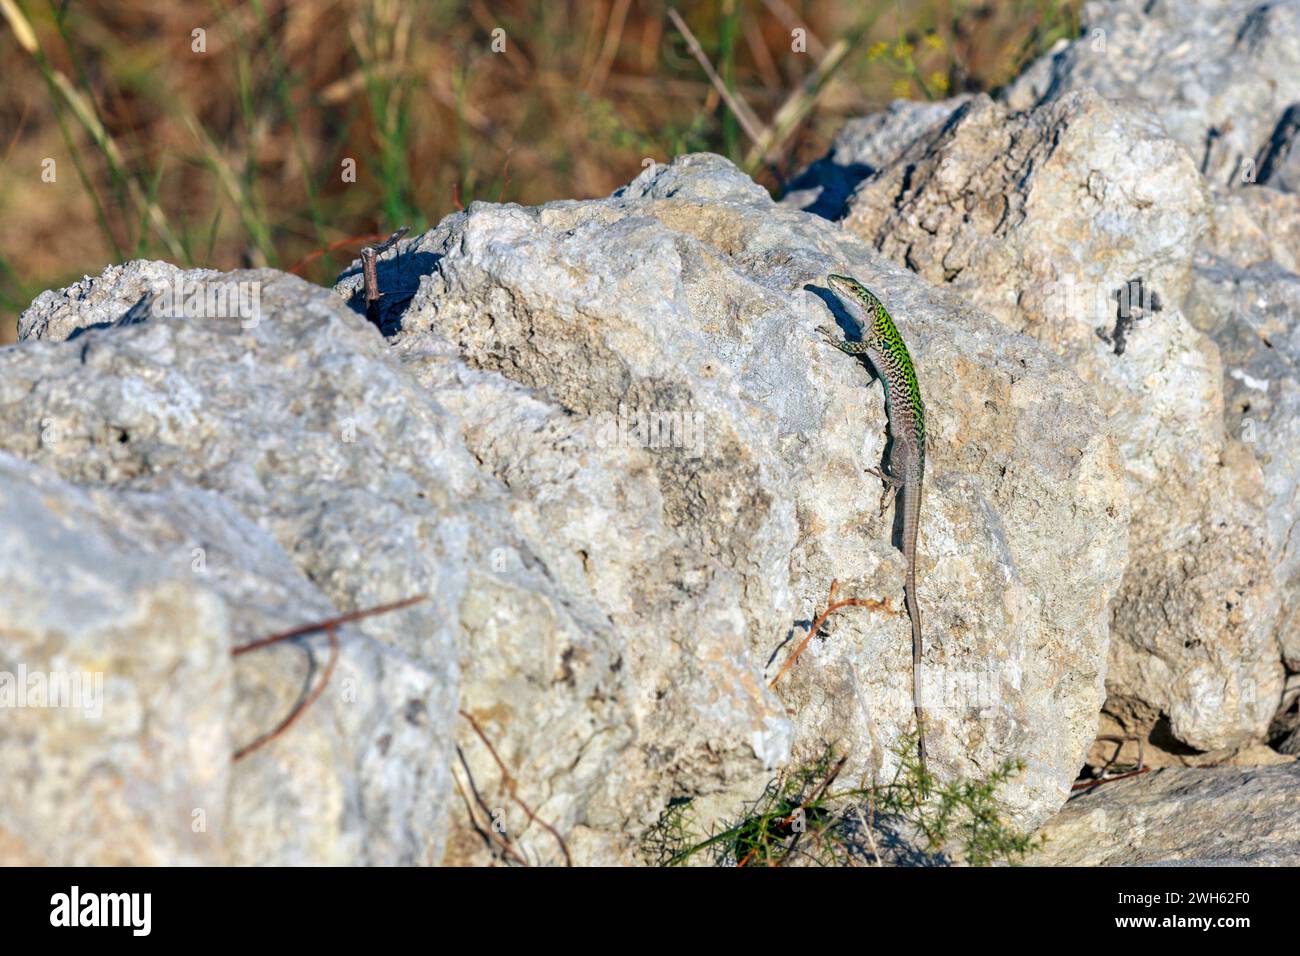 A lizard on a stone wall Stock Photo